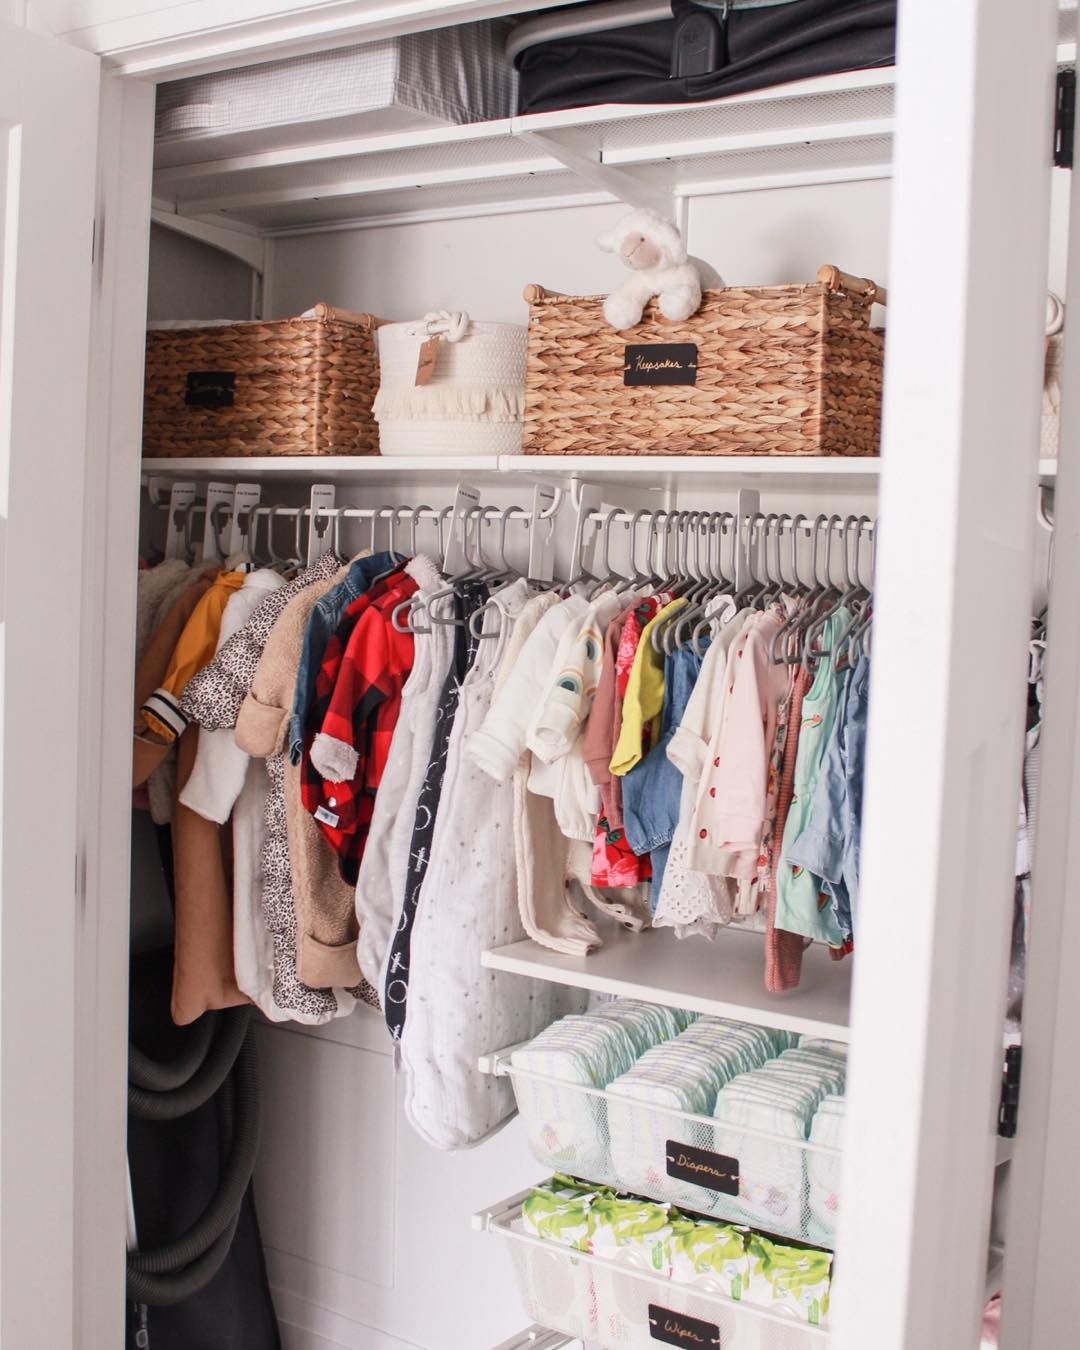 Organized baby closet. Photo by Instagram user @katemorawetz